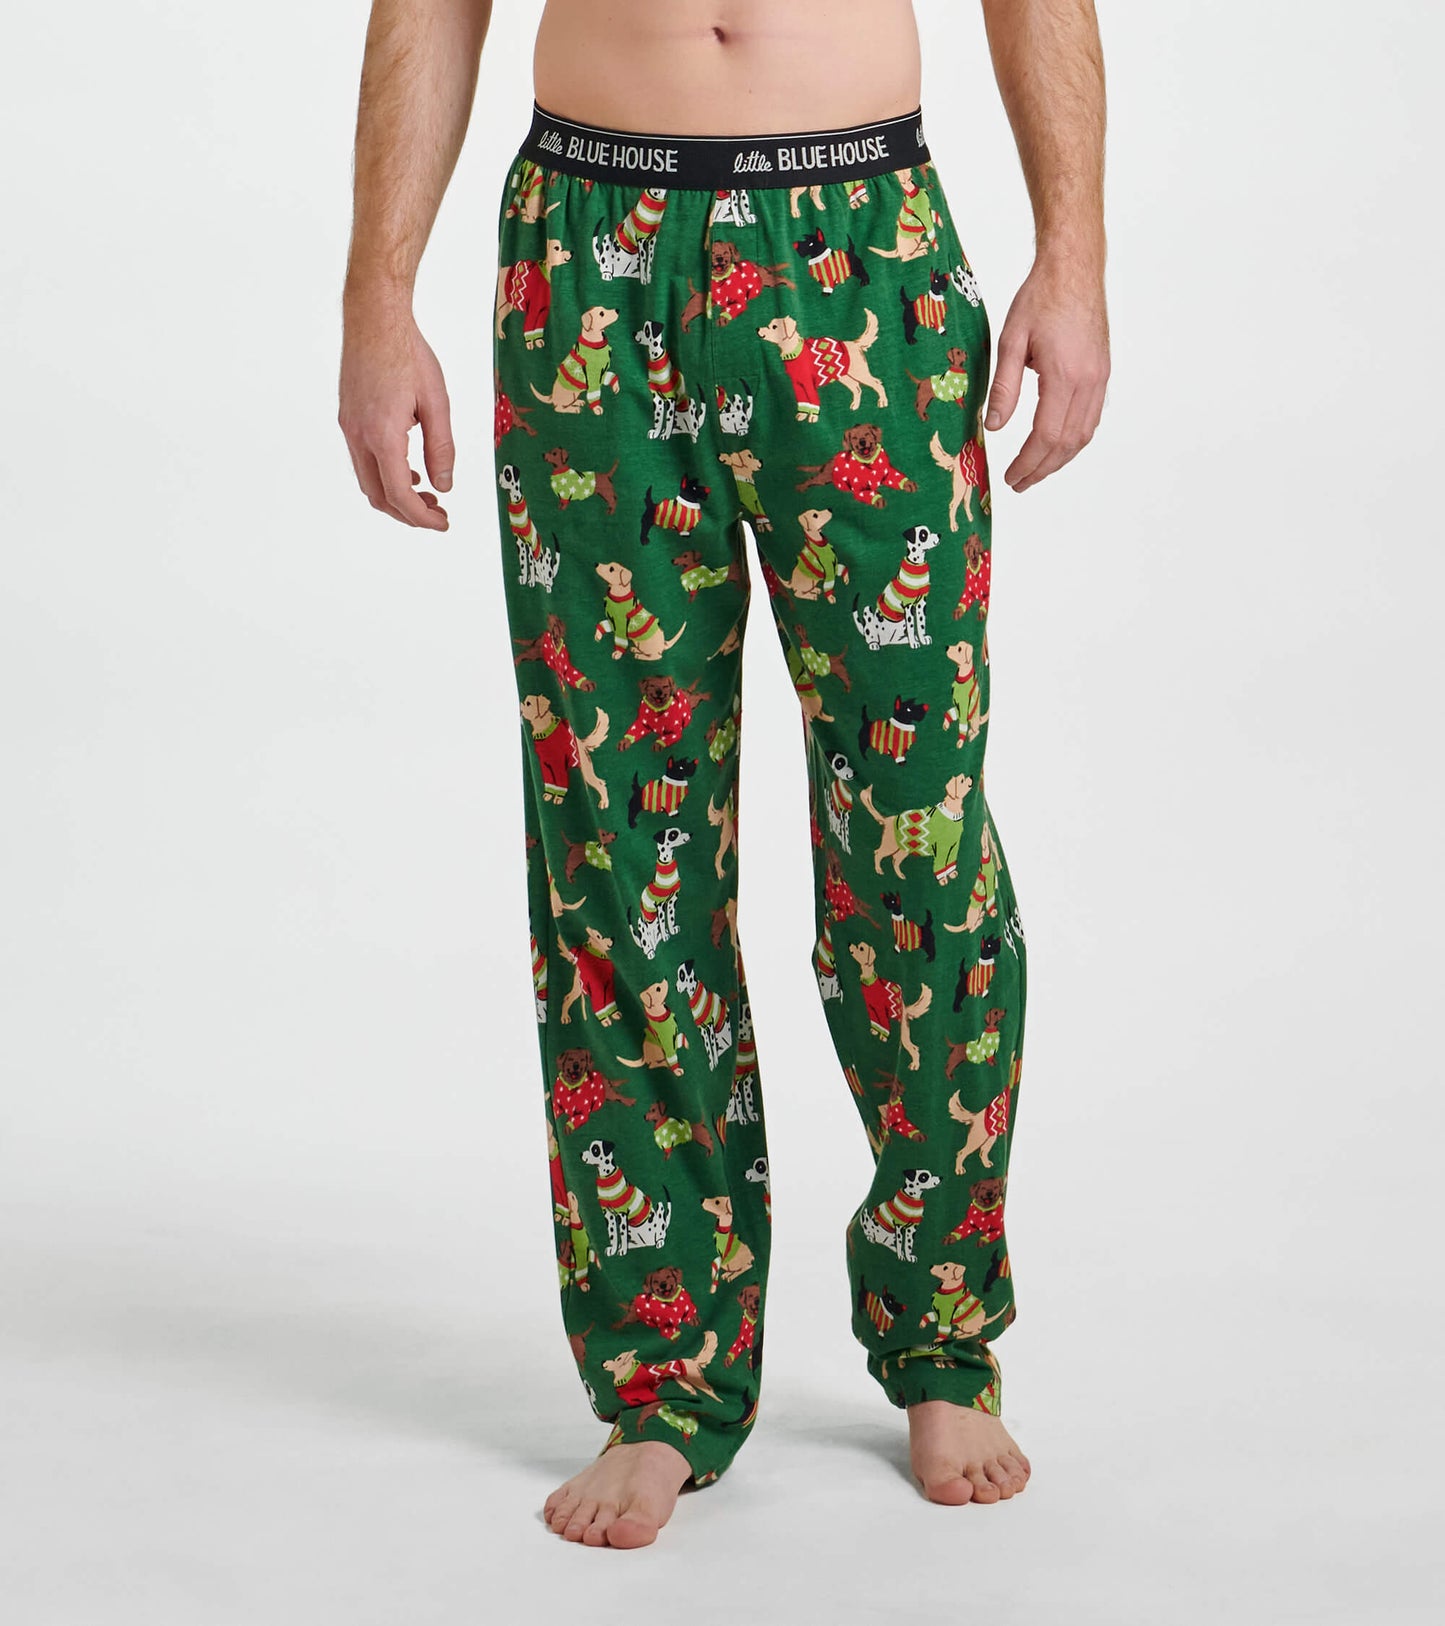 Little Blue House Men's Pajama Pants Med - Woofing Christmas (Final Sale)